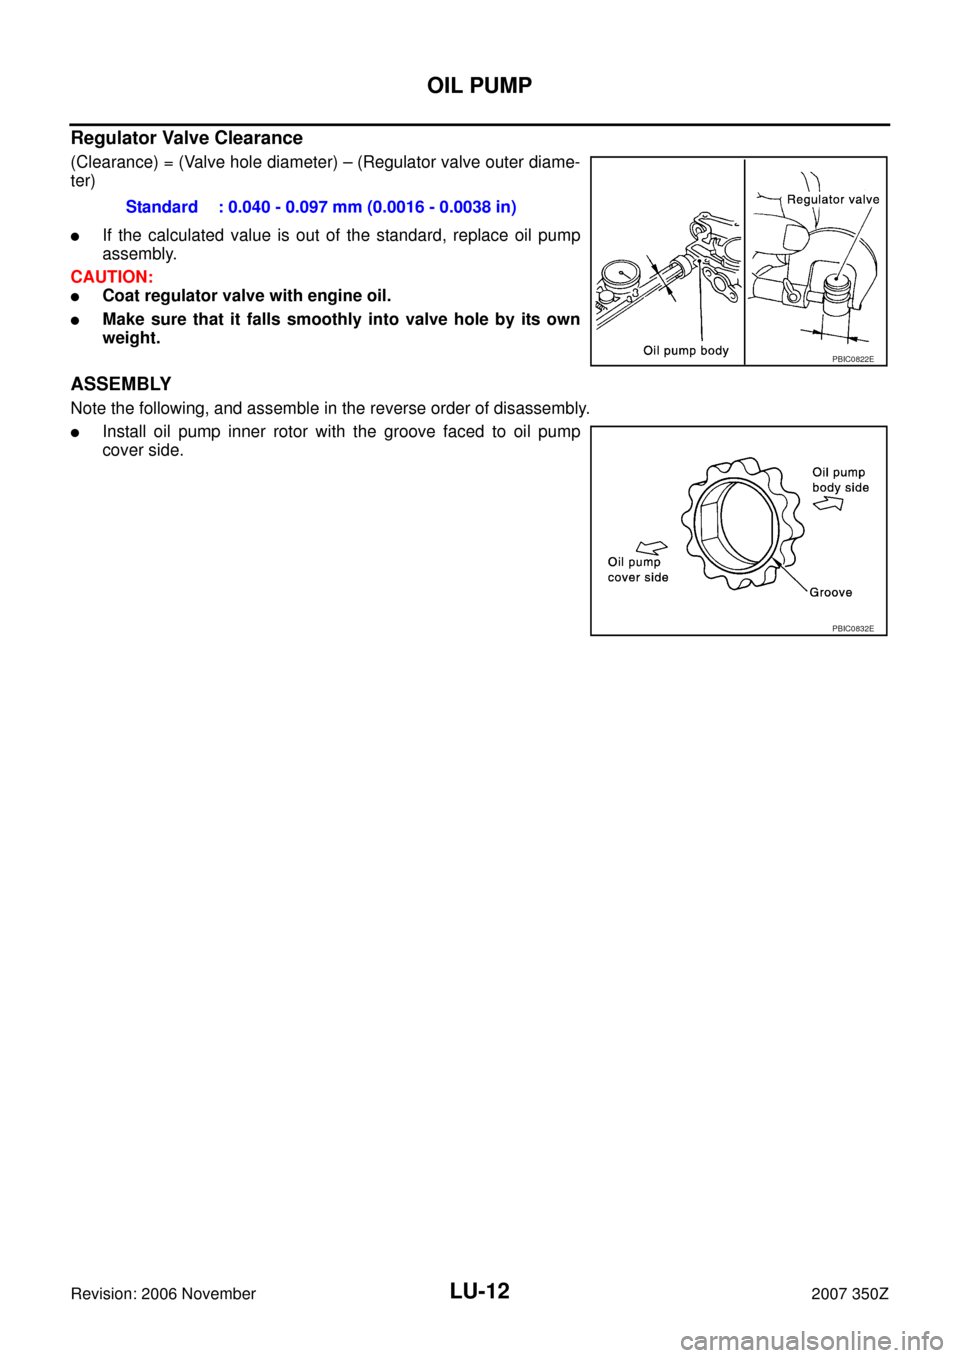 NISSAN 350Z 2007 Z33 Engine Lubrication System User Guide LU-12
OIL PUMP
Revision: 2006 November2007 350Z
Regulator Valve Clearance
(Clearance) = (Valve hole diameter) – (Regulator valve outer diame-
ter)
If the calculated value is out of the standard, re